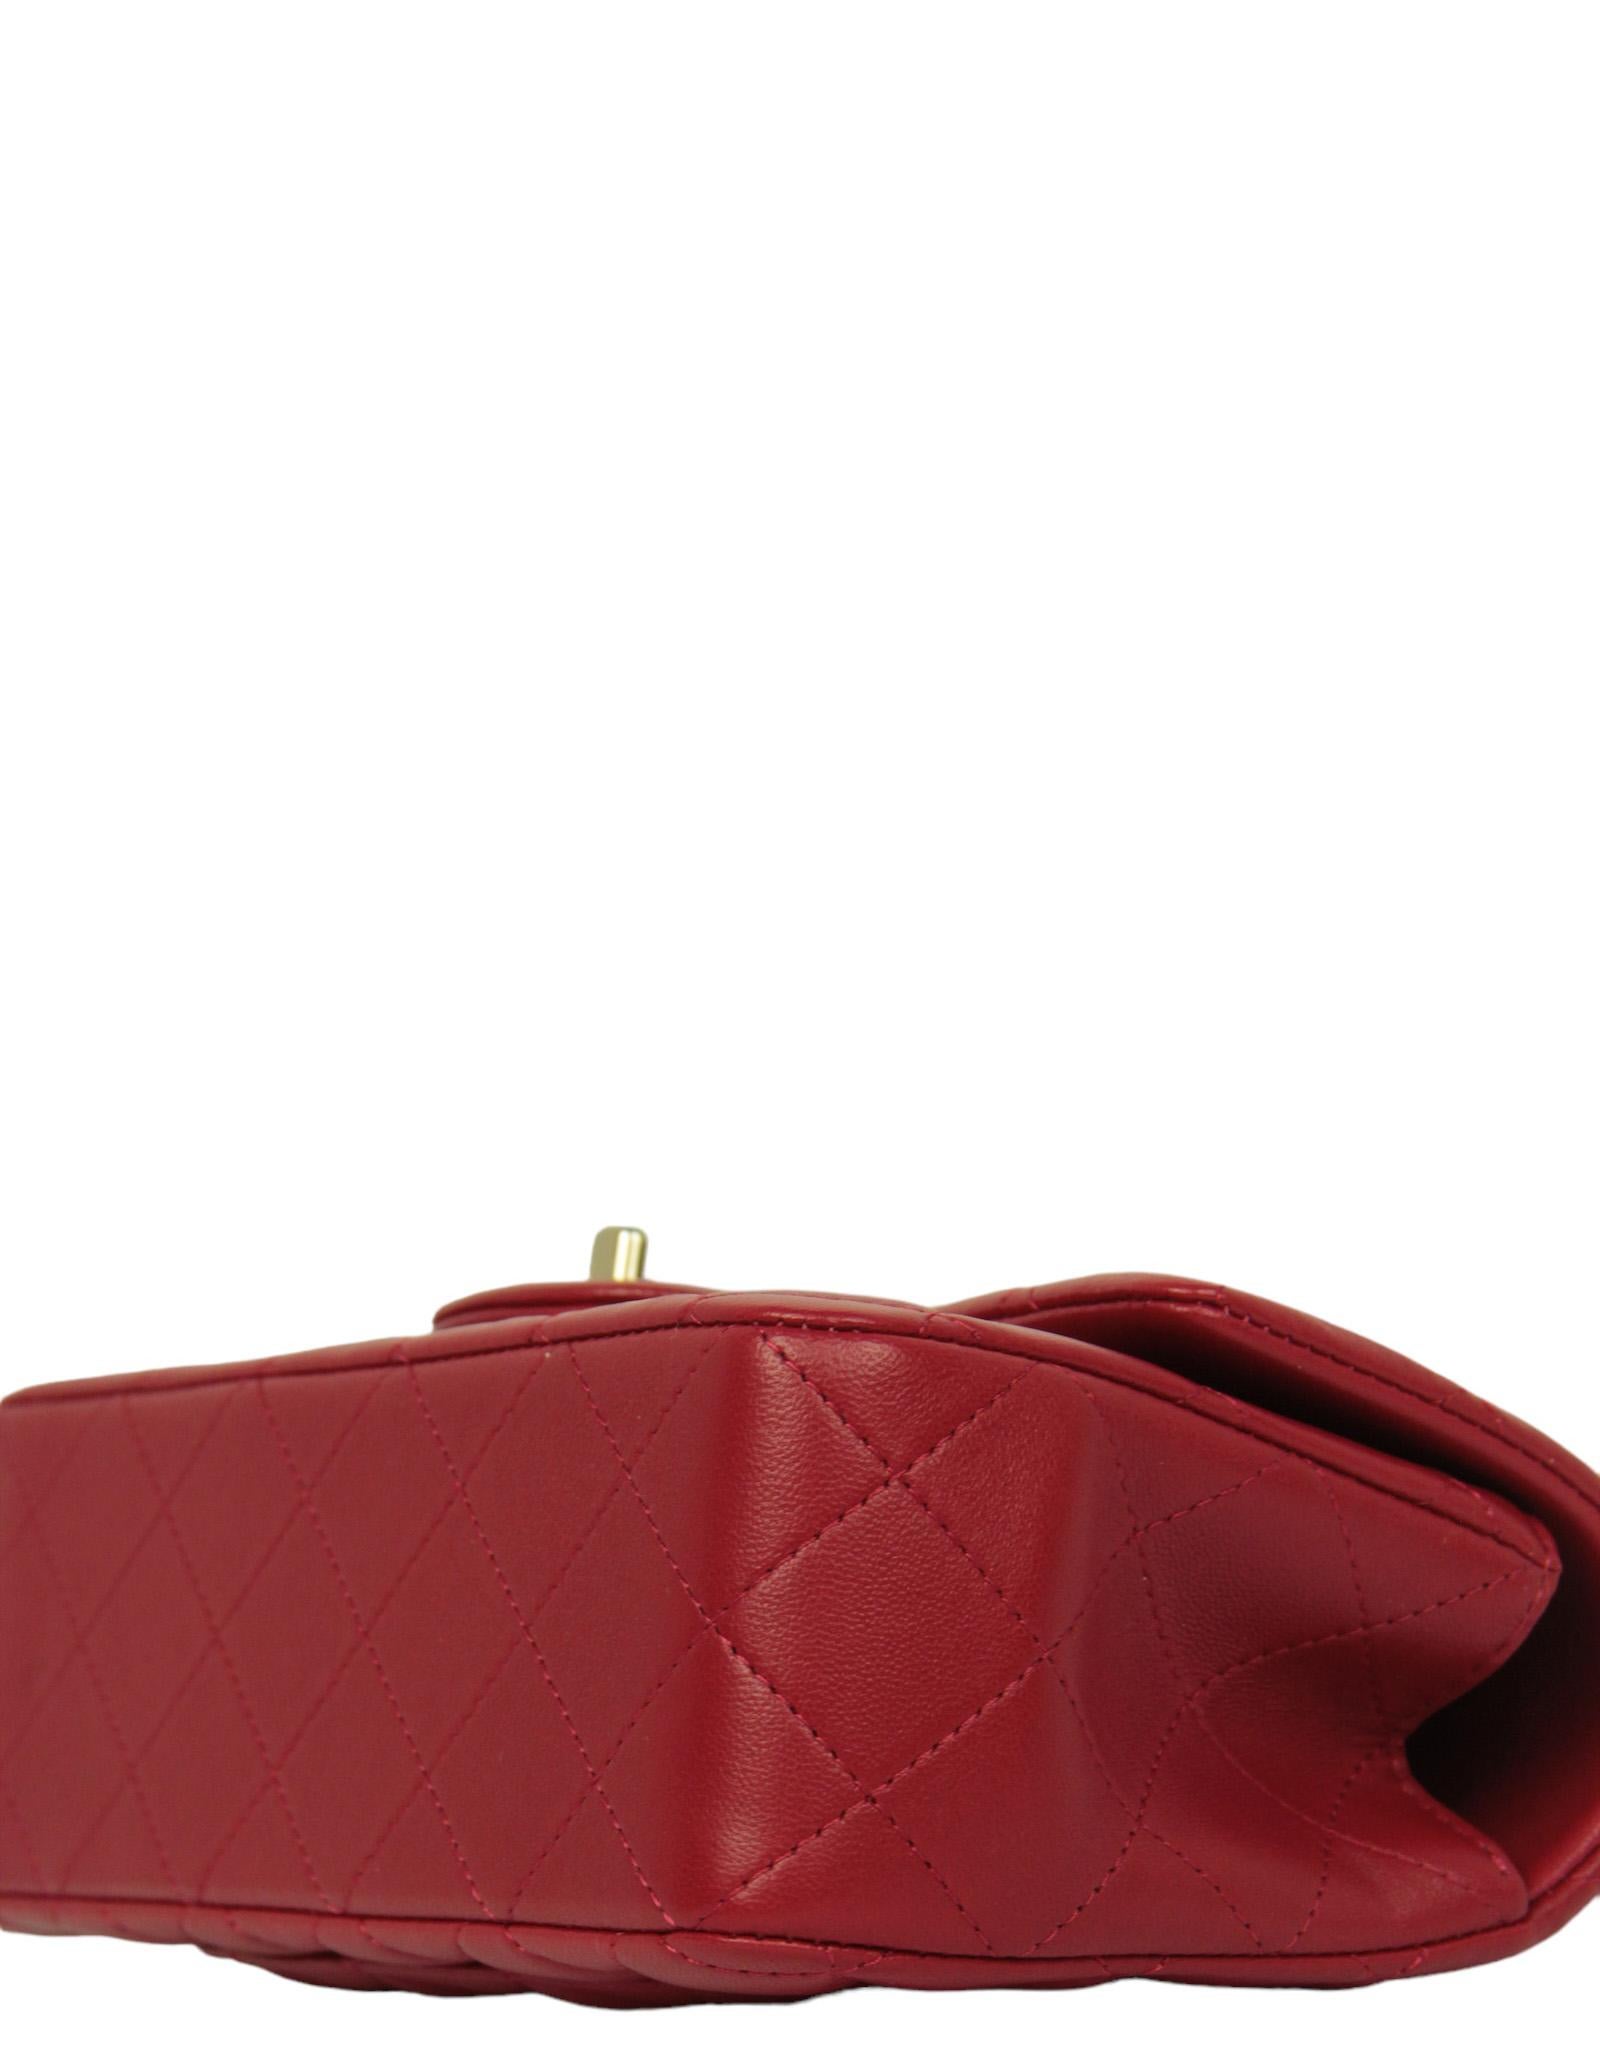 Chanel NWT Red Lambskin Rectangular Mini Flapbag w/ Handle For Sale 1